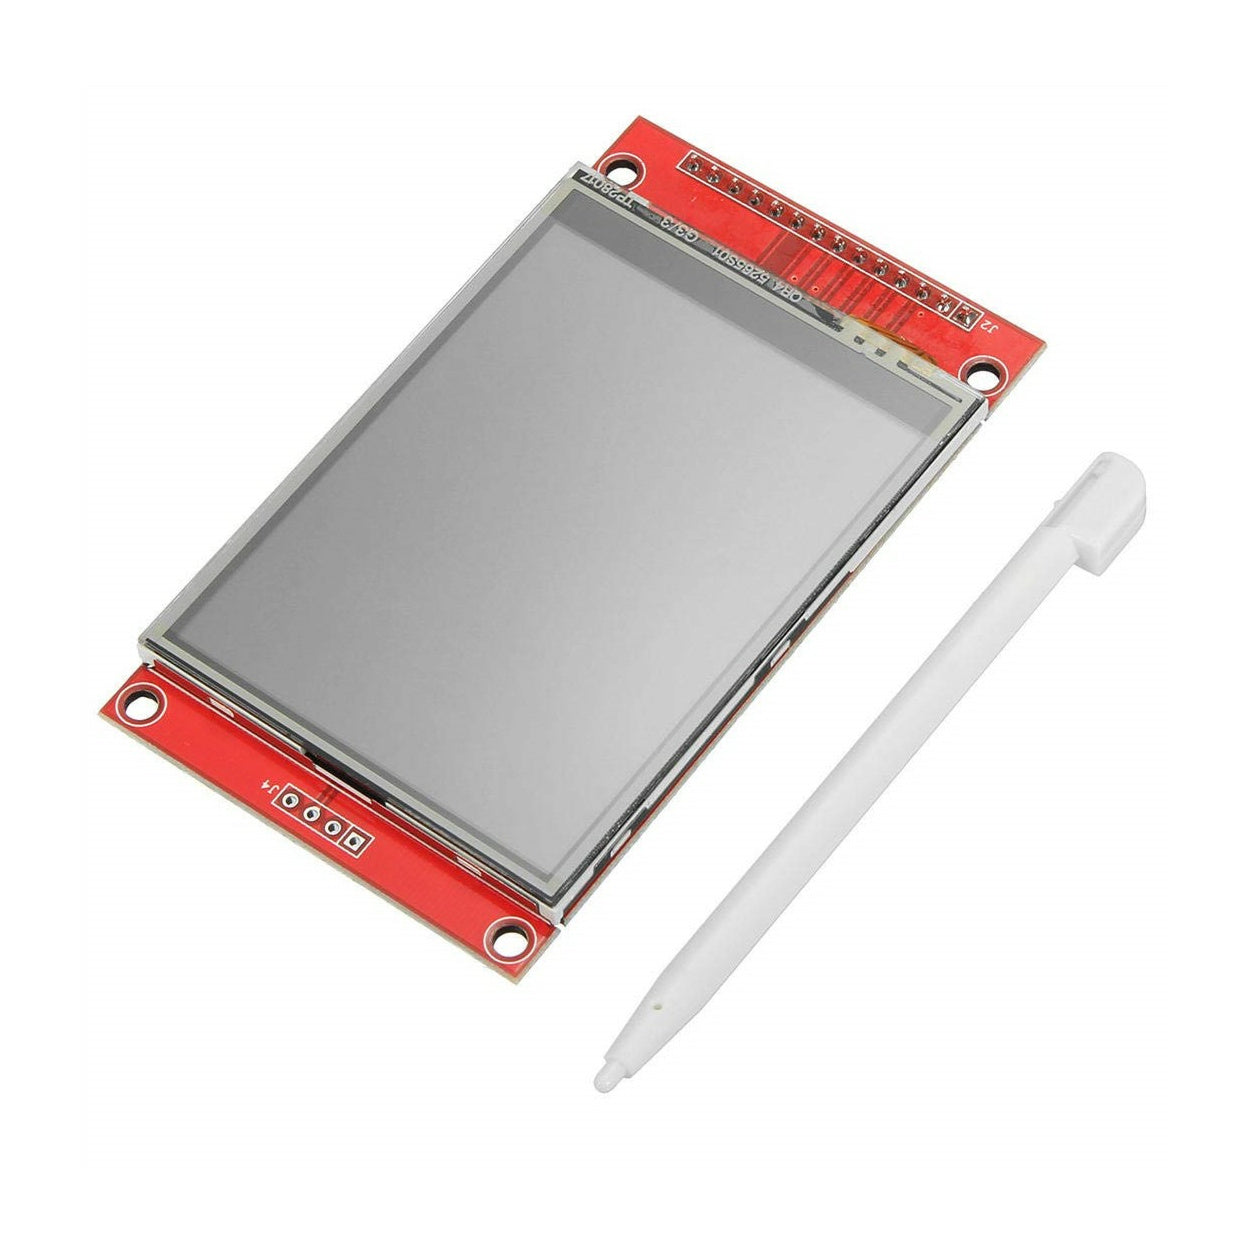 2.8" inch TFT LCD Screen  Module UNO R3 Compatible